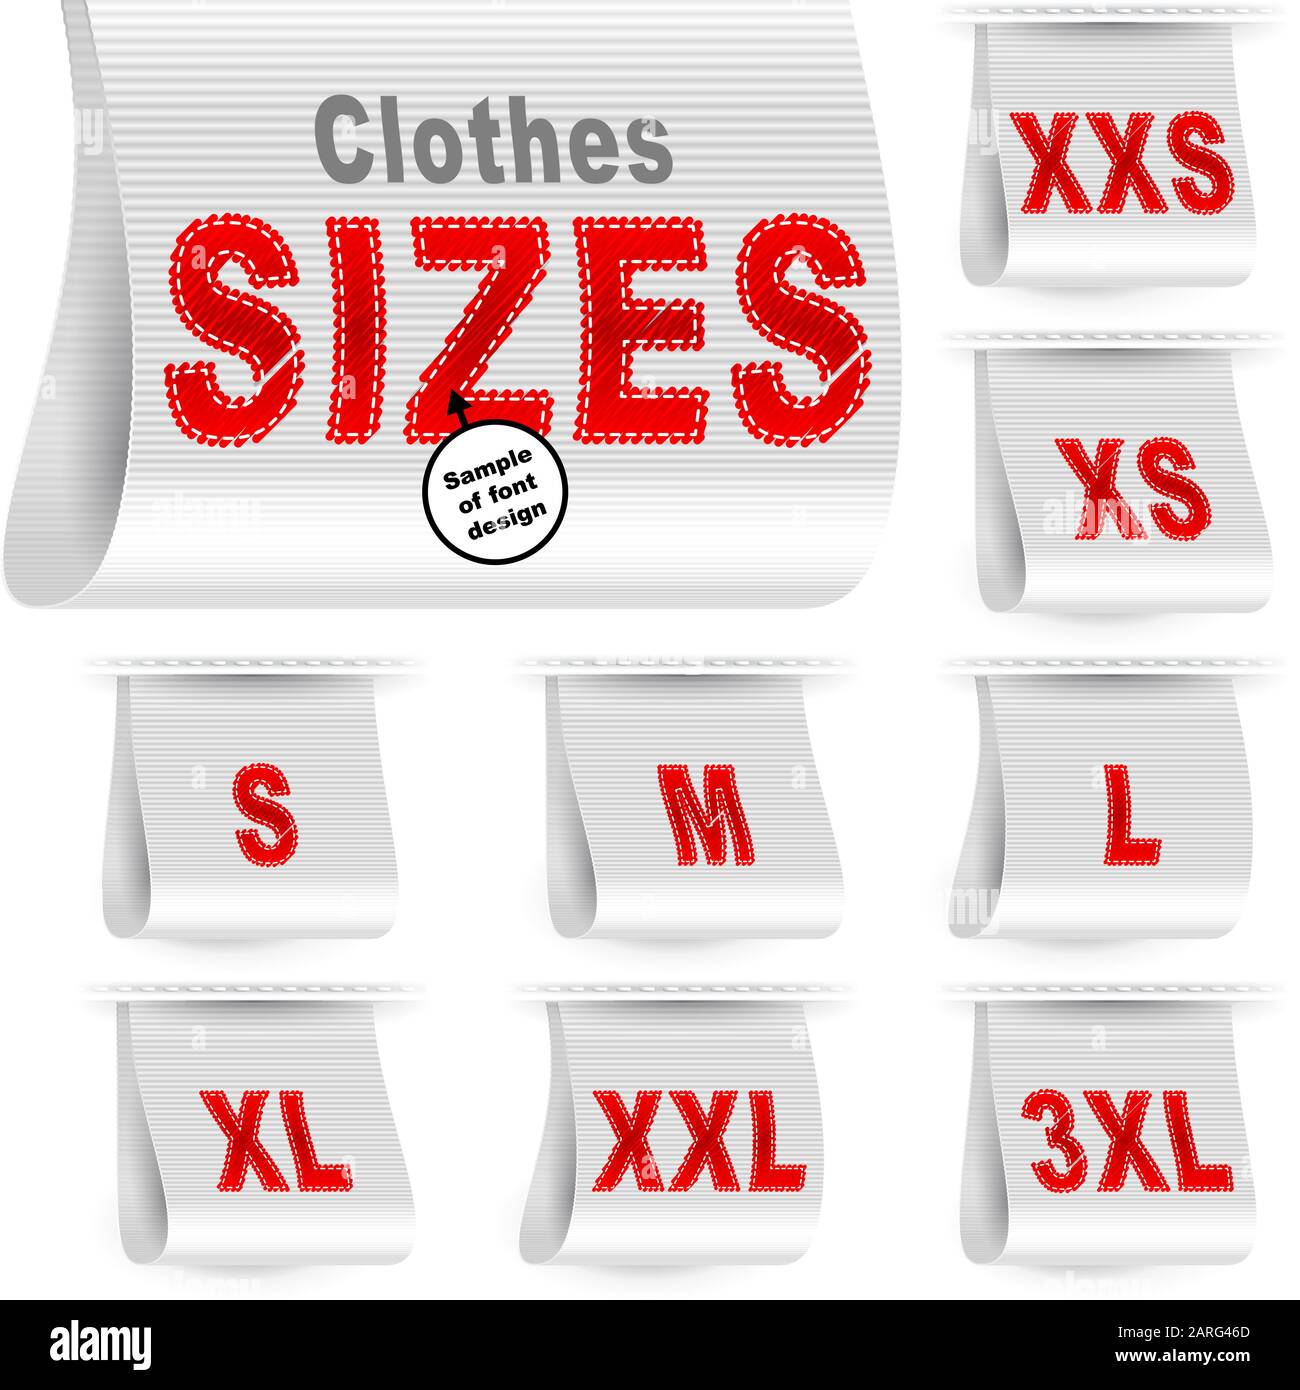 Clothes size labels with standard designation symbols of garment